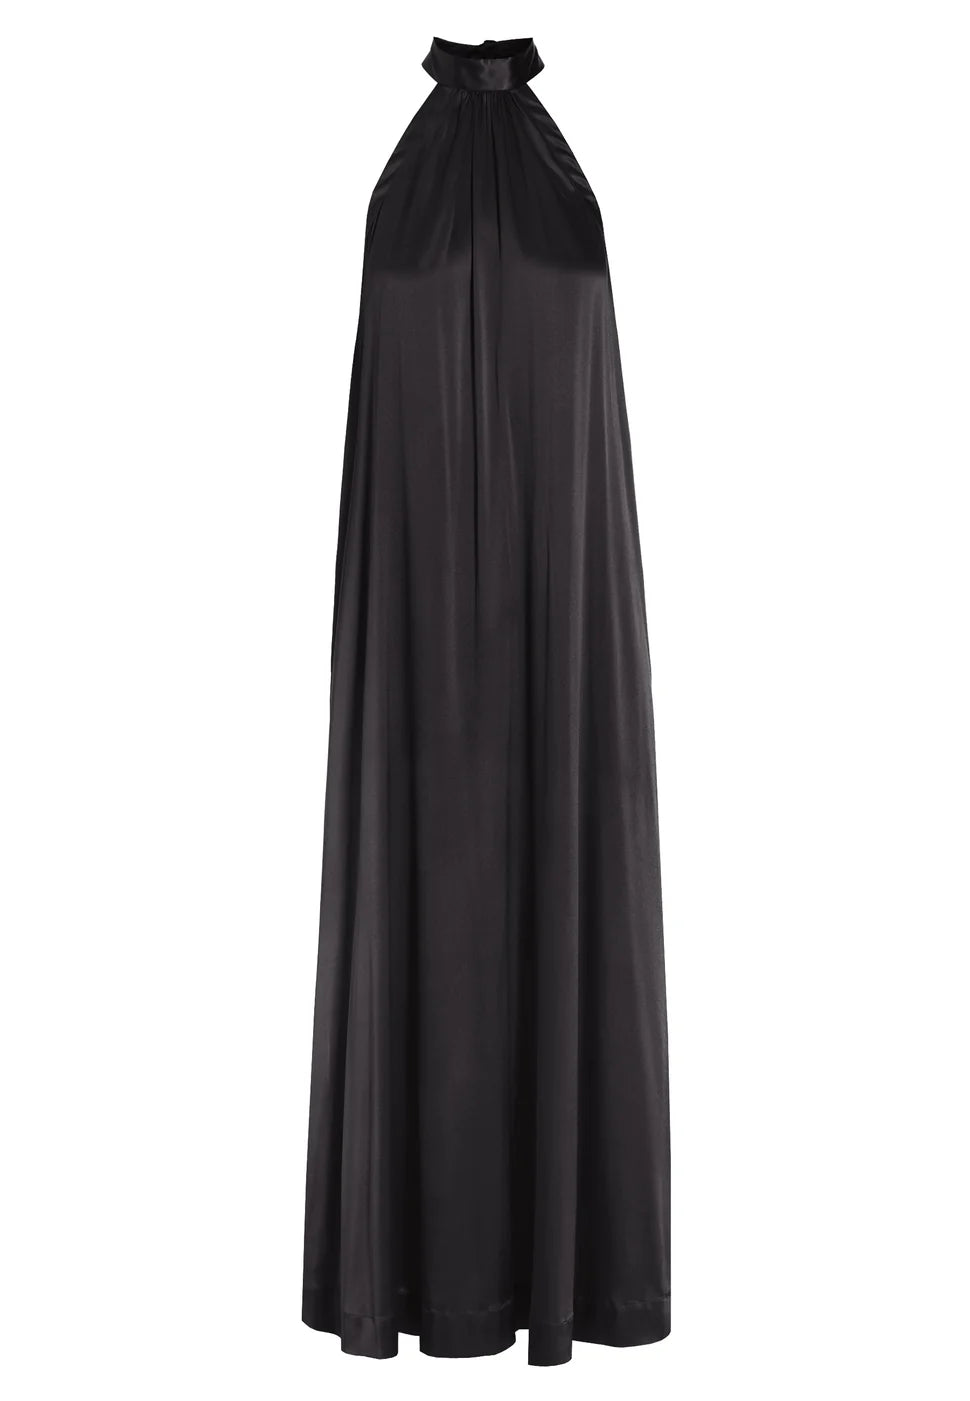 Shop Ninka Black Silk Halterneck Dress by Dea Kudibal at Jessimara.com